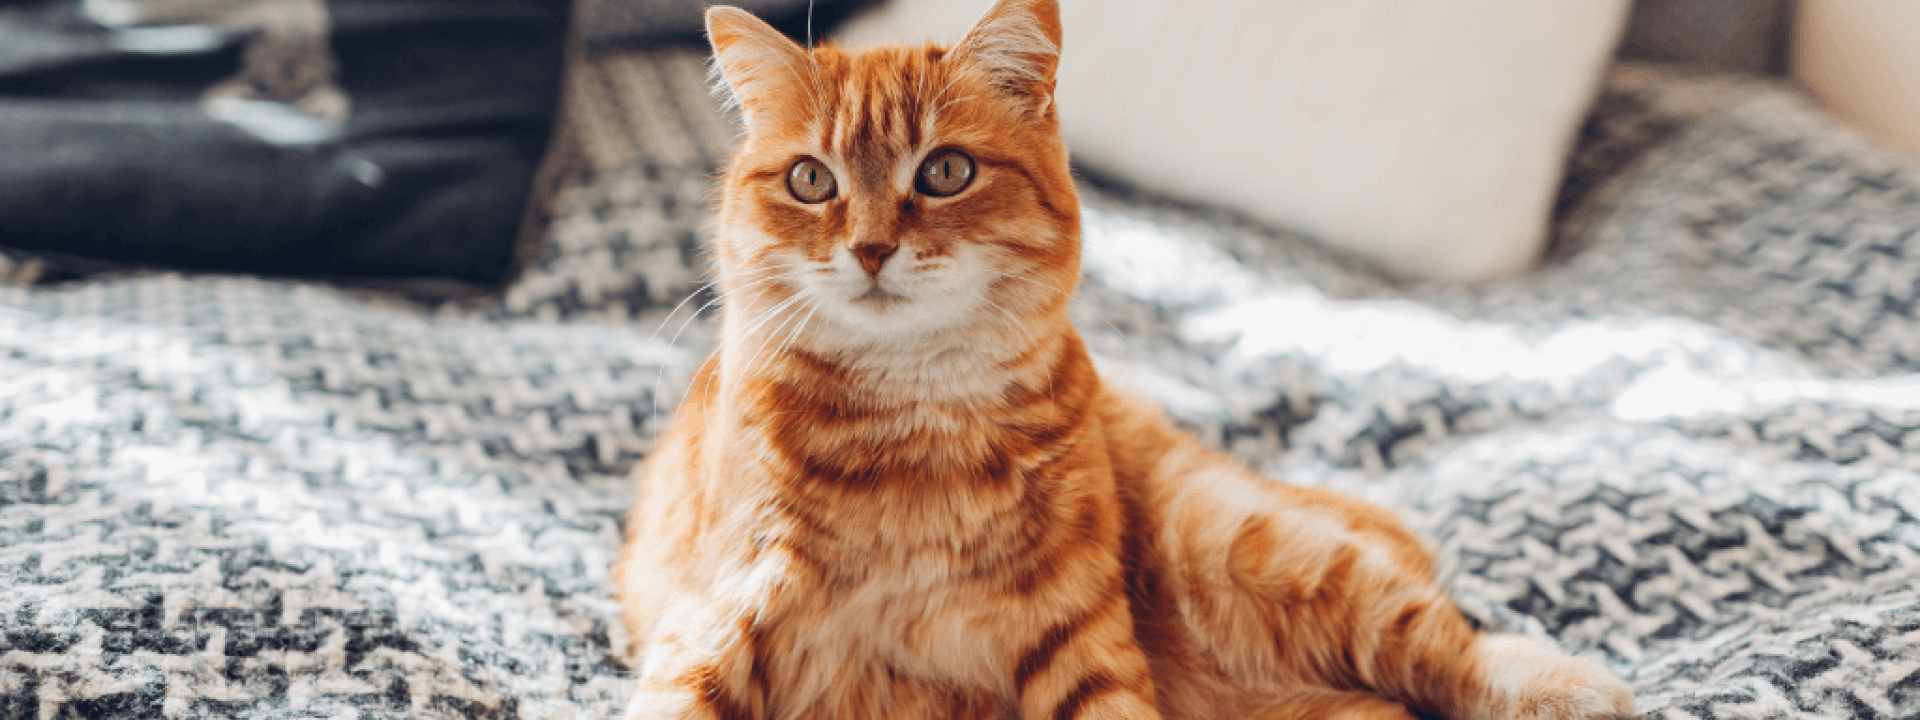 Large ginger cat relaxing on blanket.